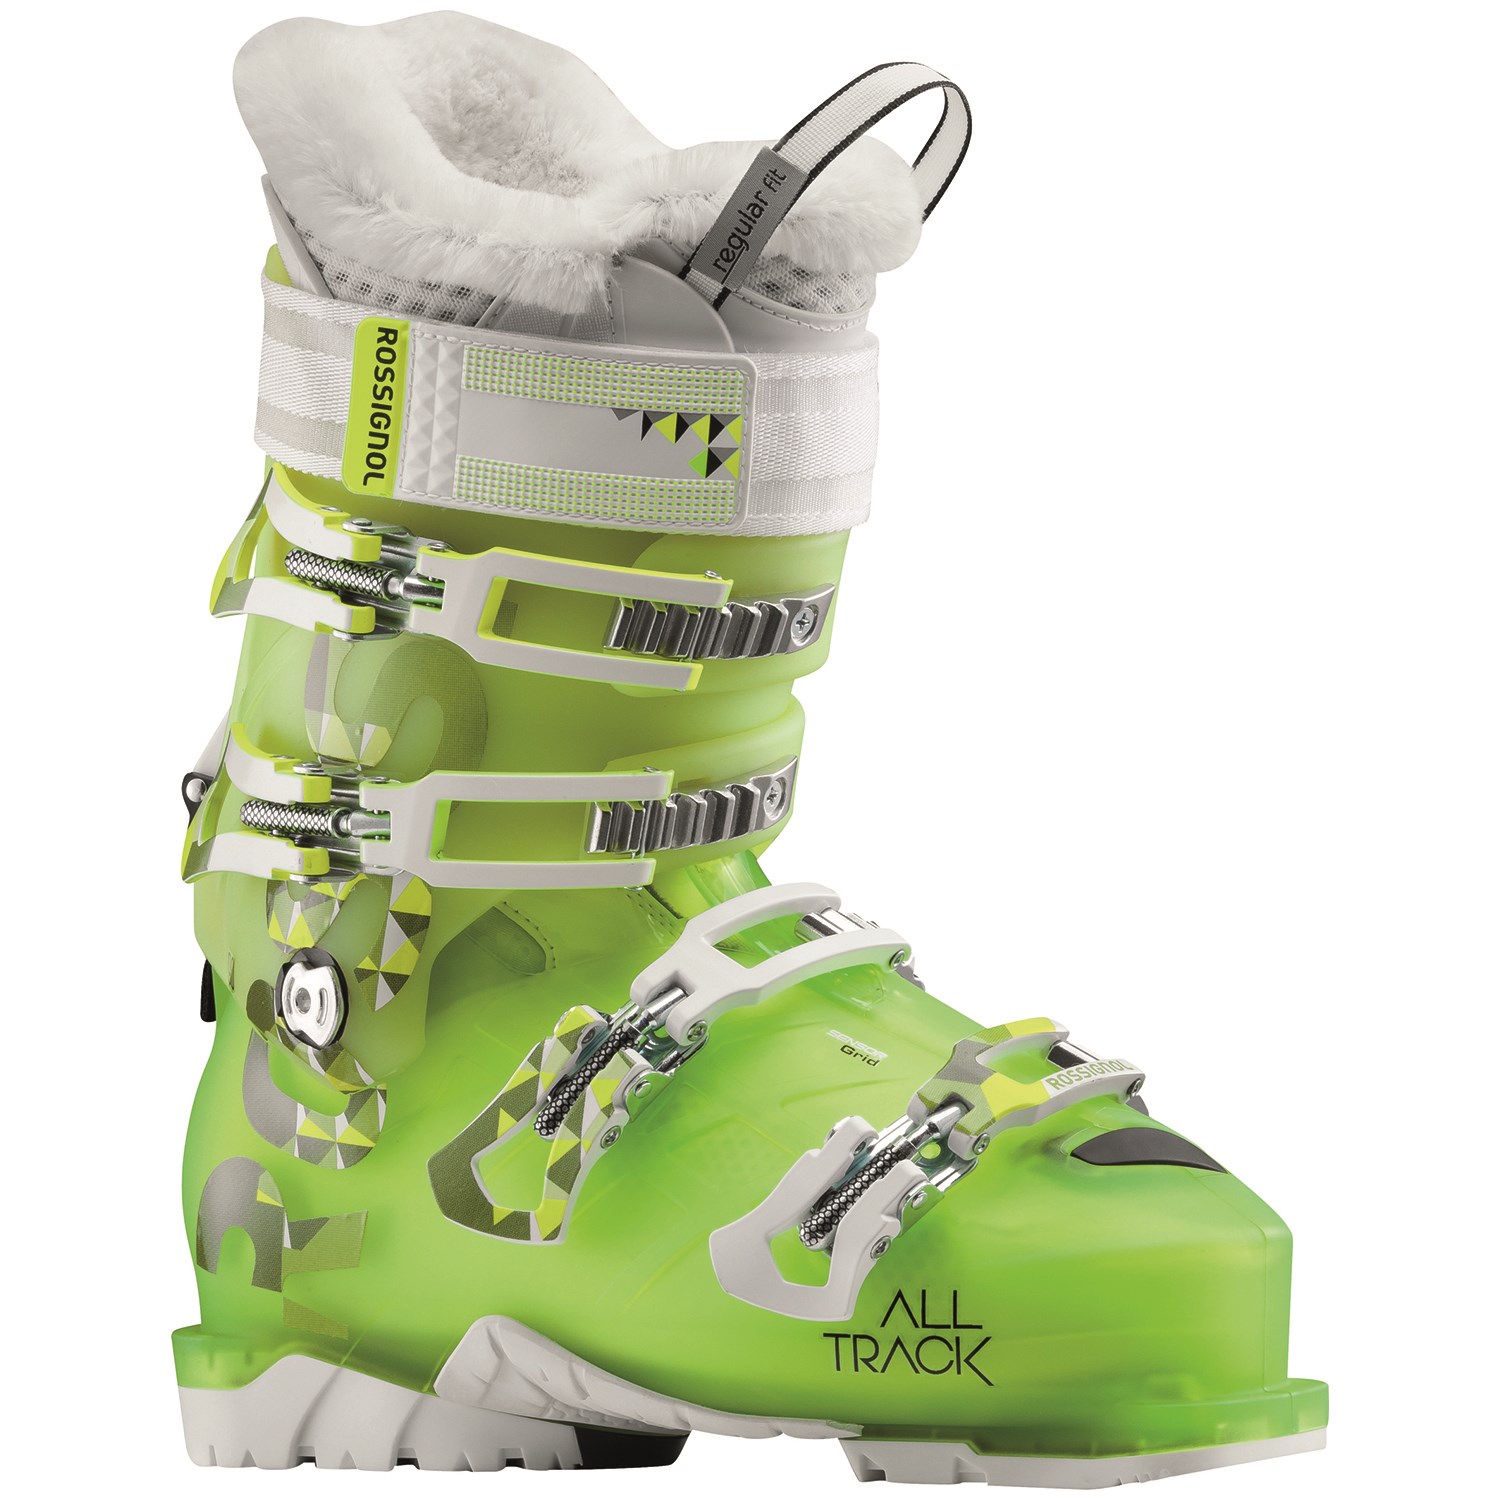 rossignol track 90 ski boots